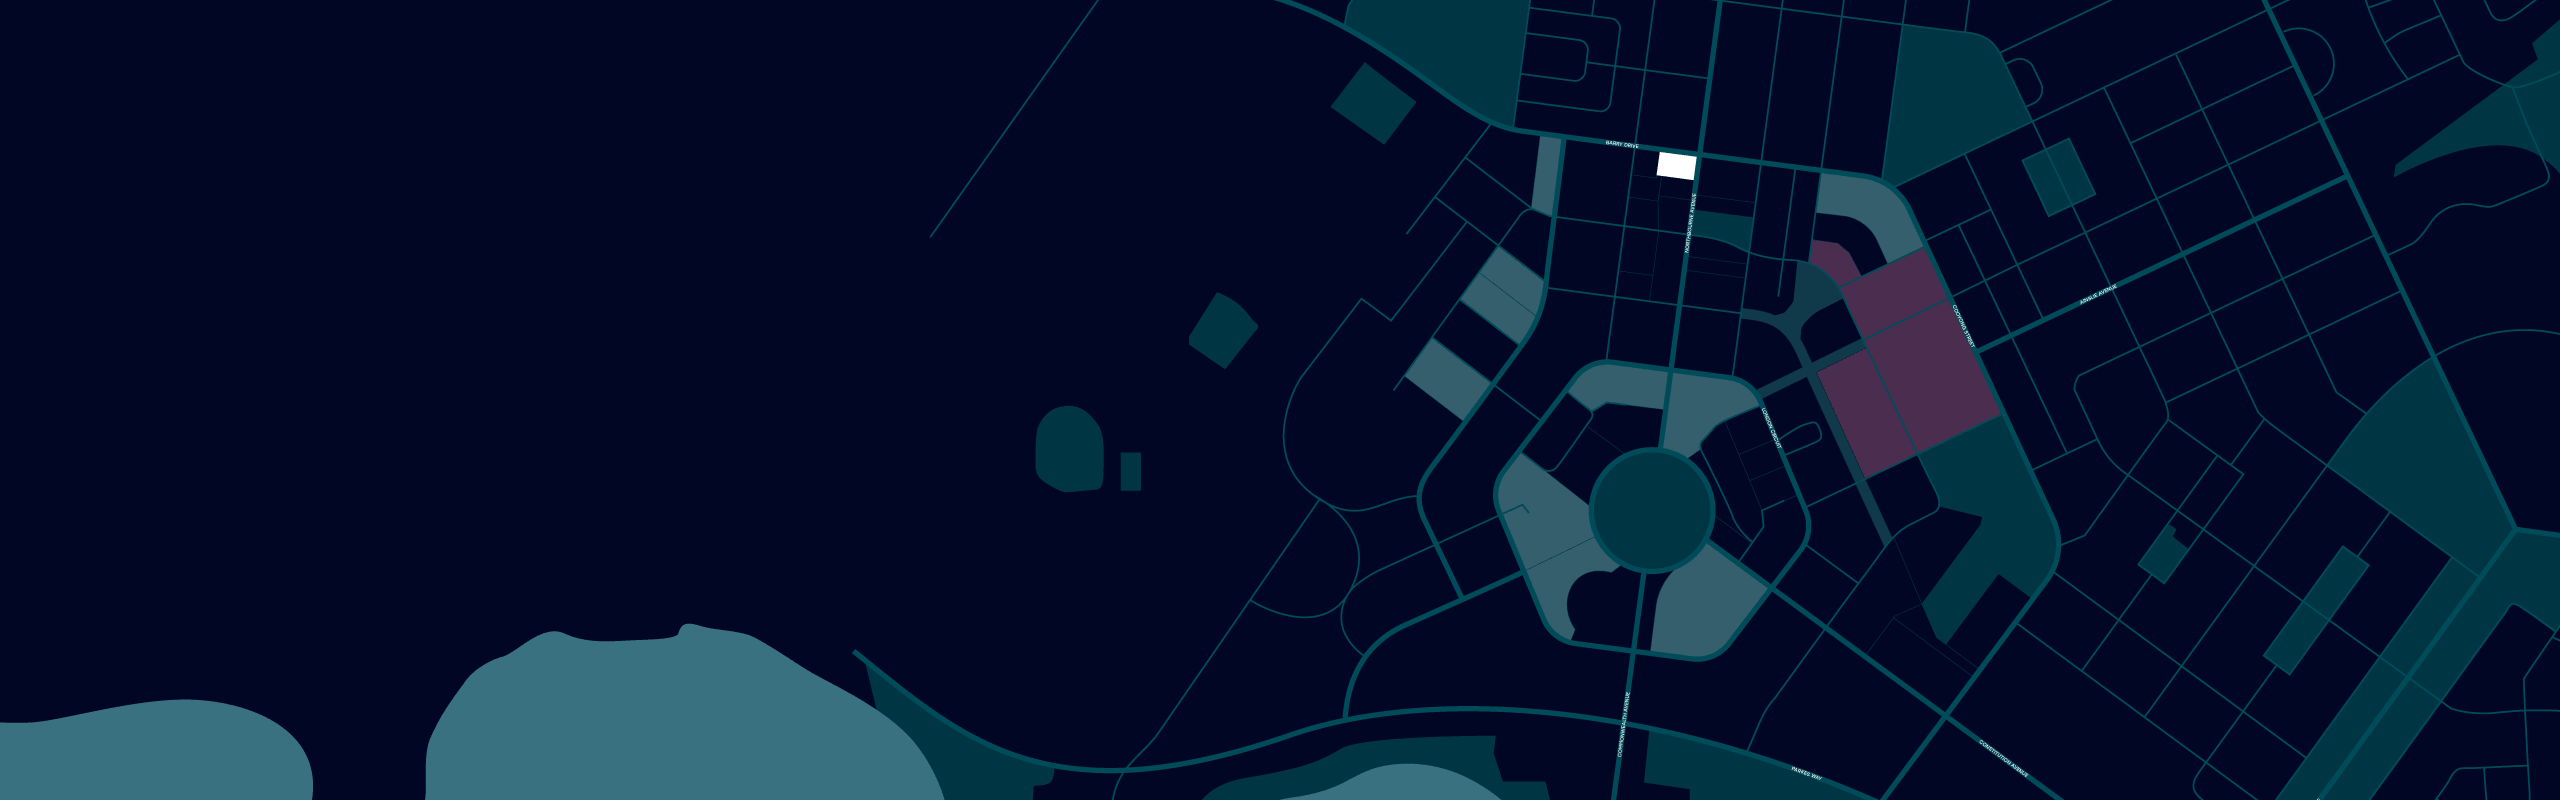 Map of Canberra CBD